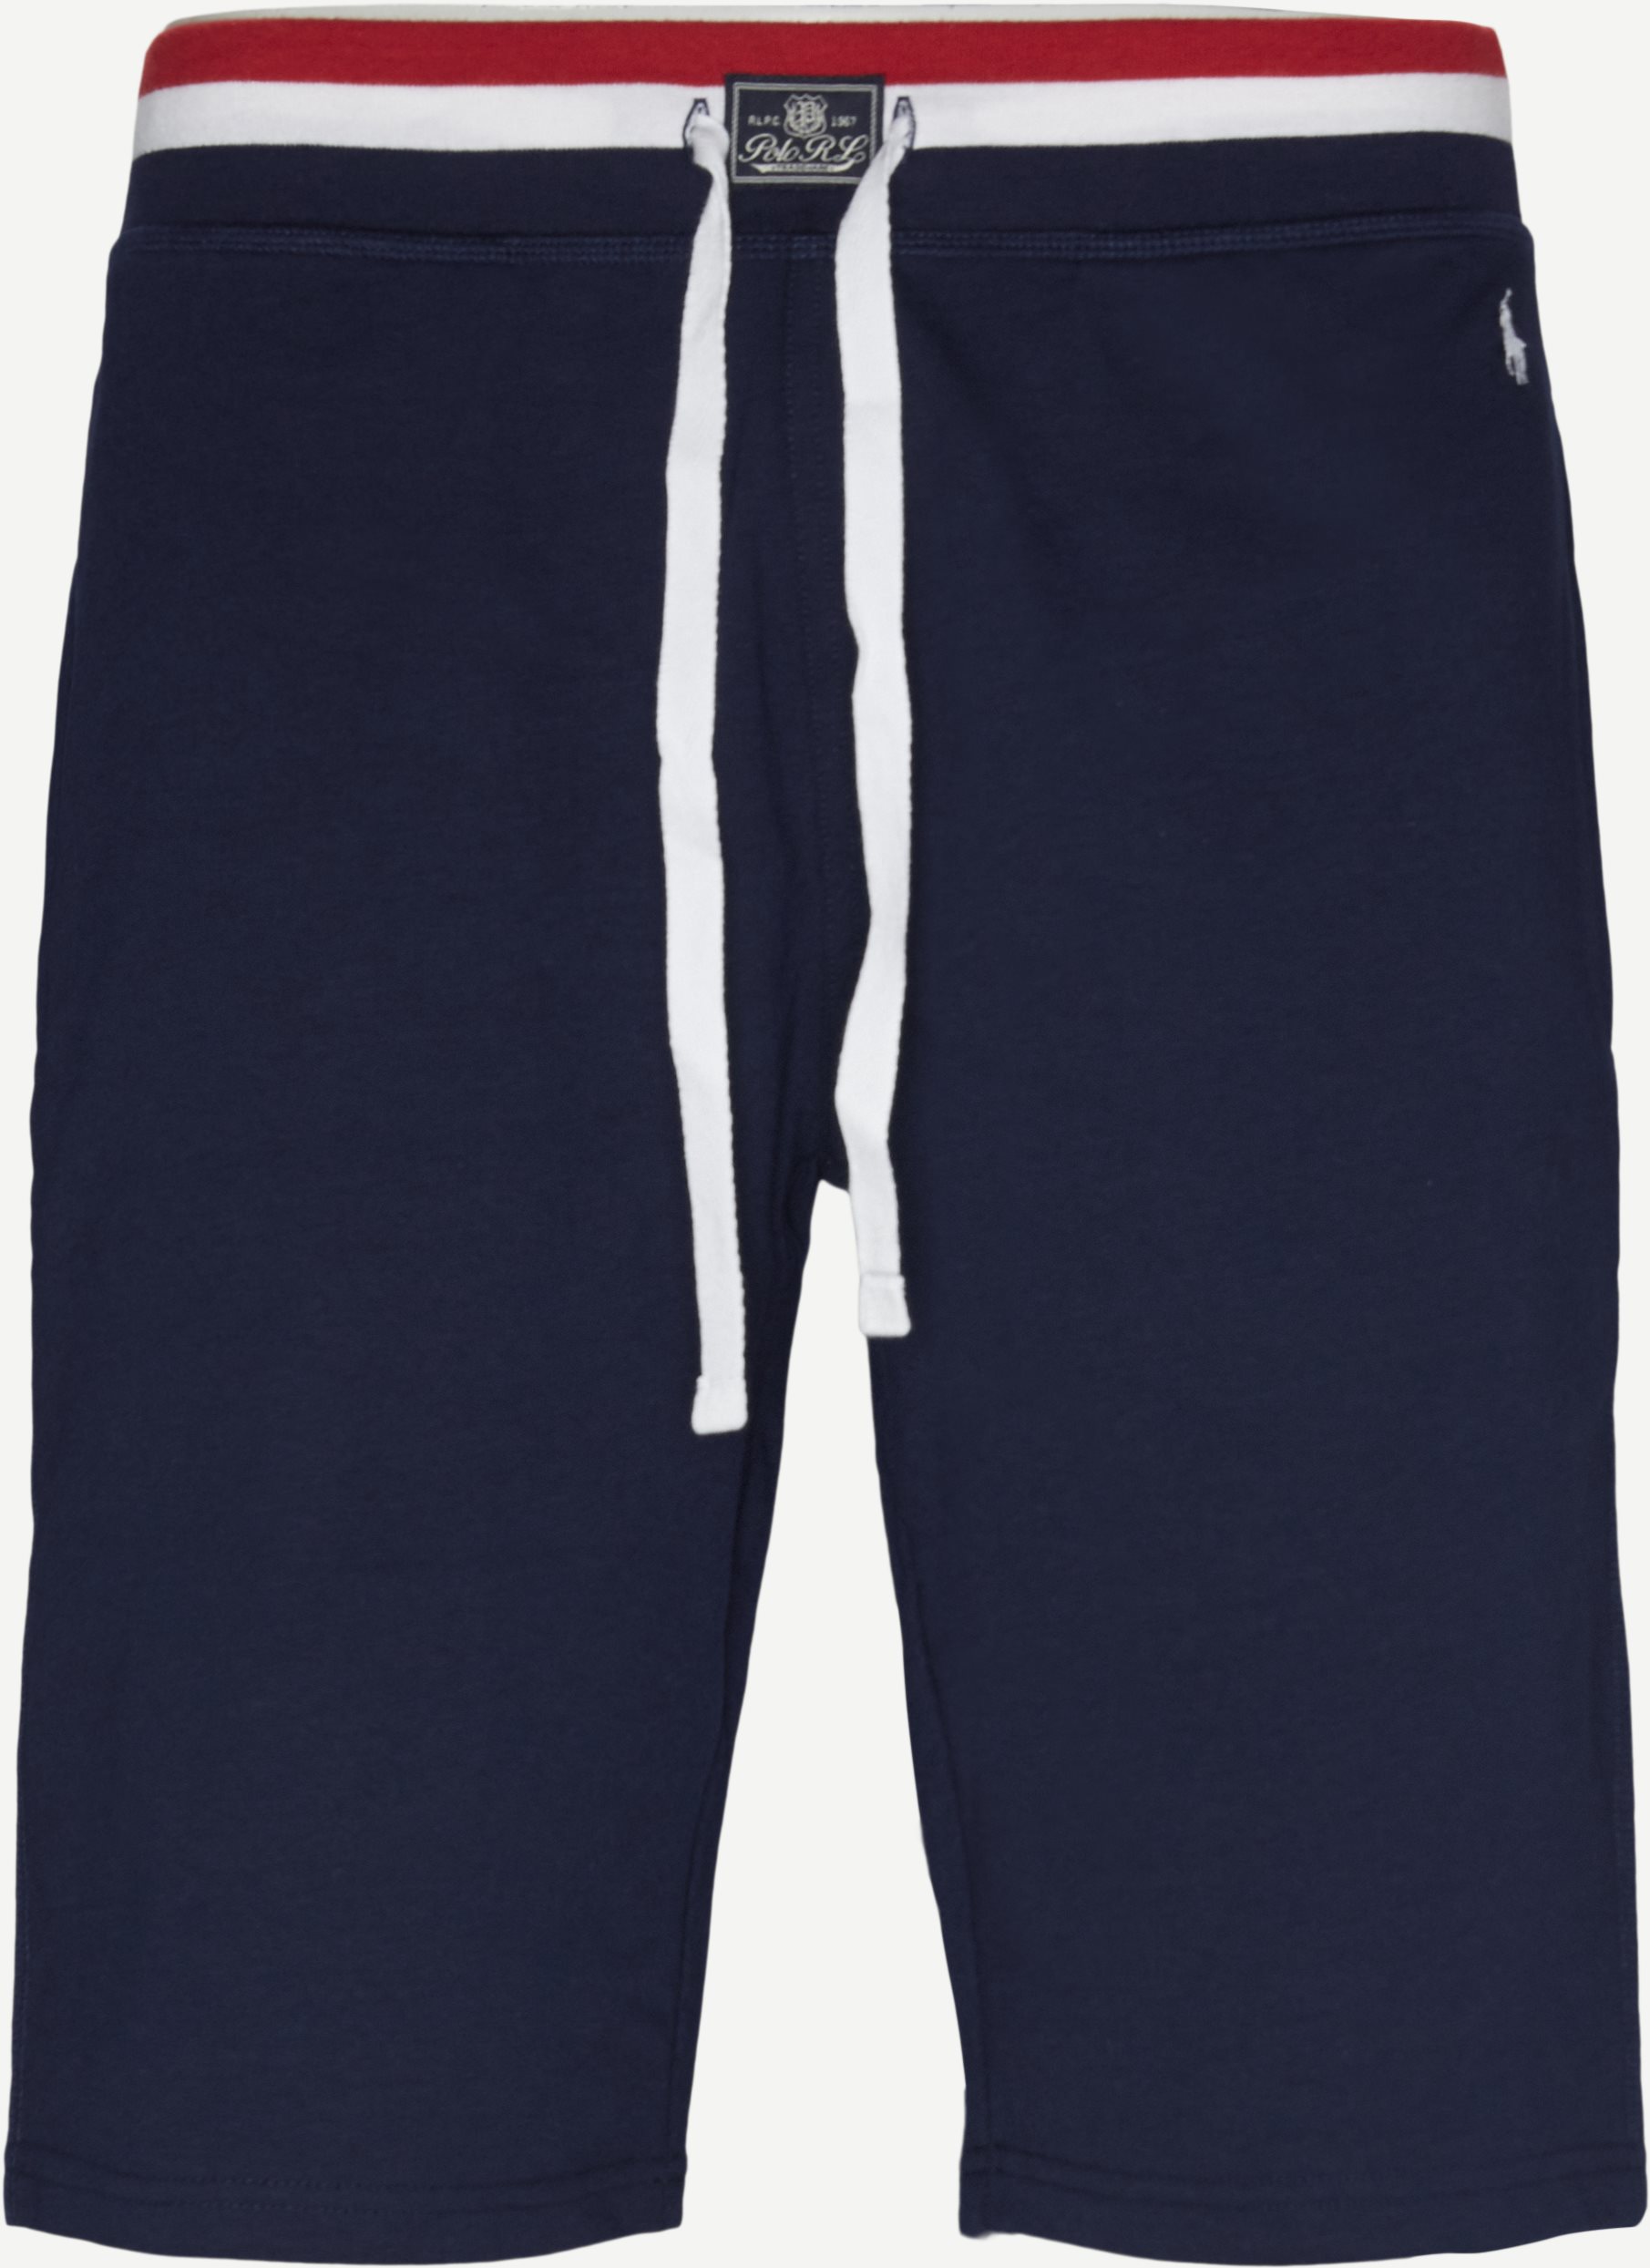 Shorts aus Baumwollfleece - Shorts - Regular fit - Blau